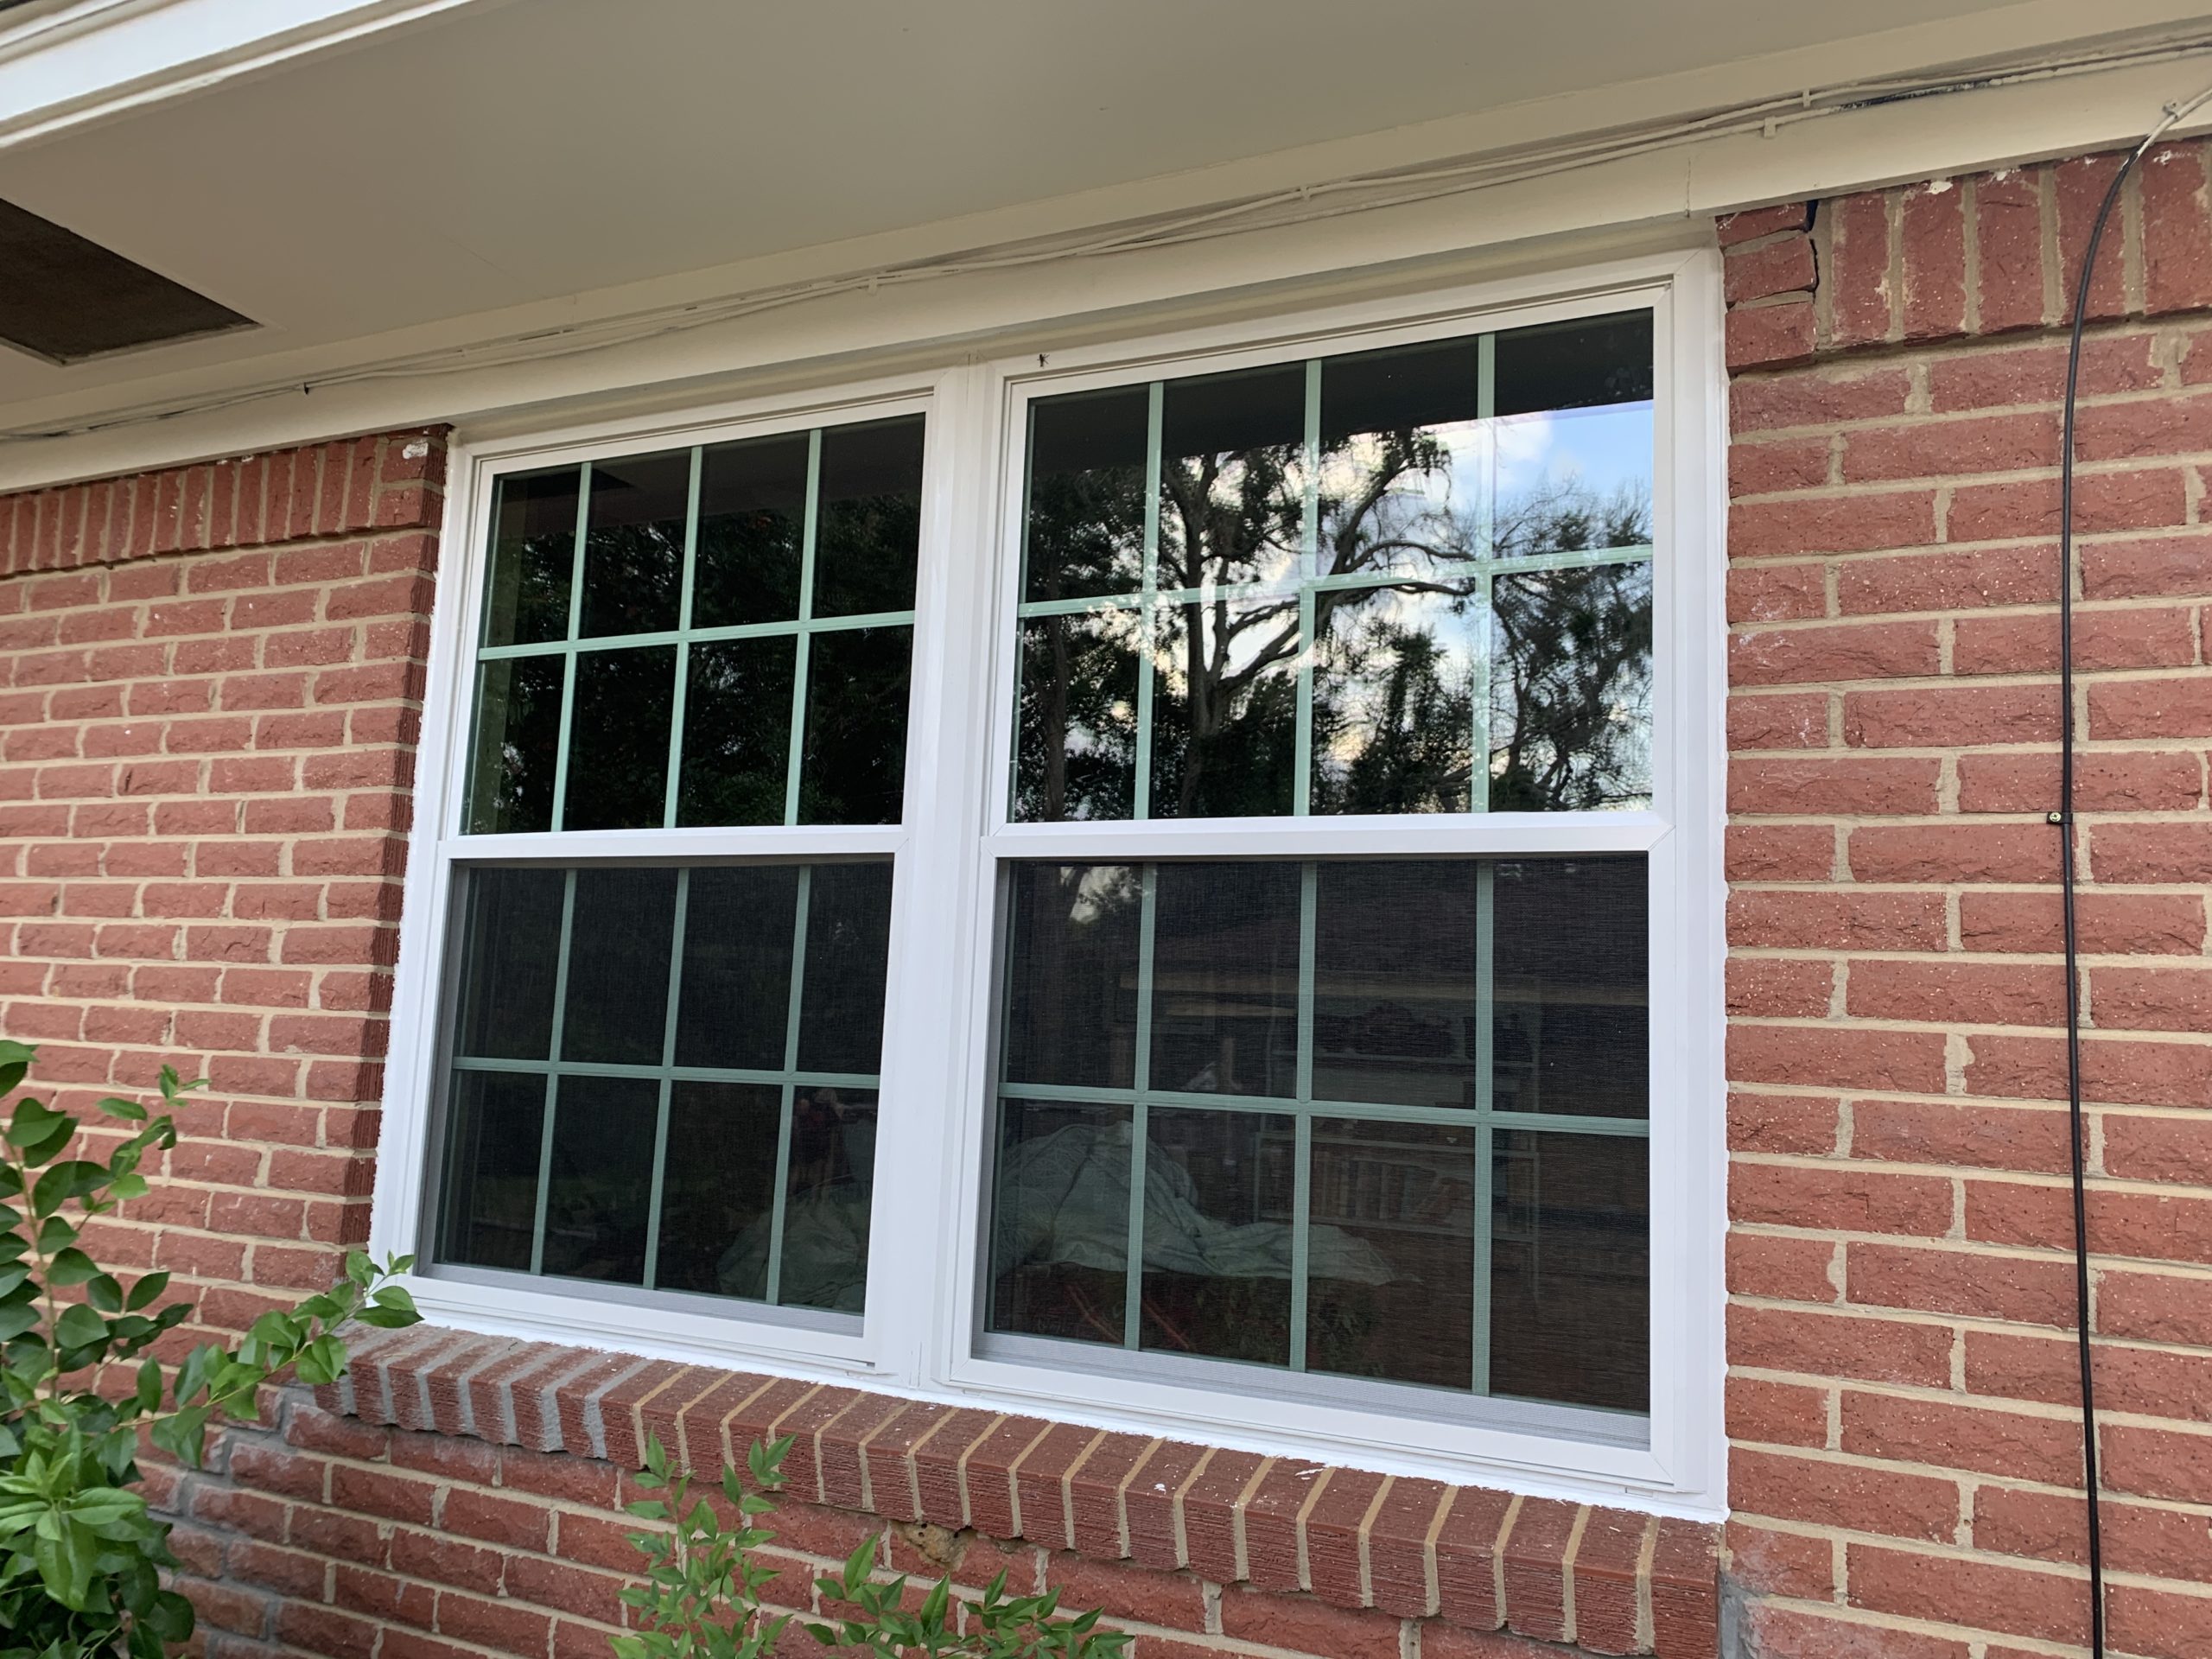 vinyl windows with energy efficient glass